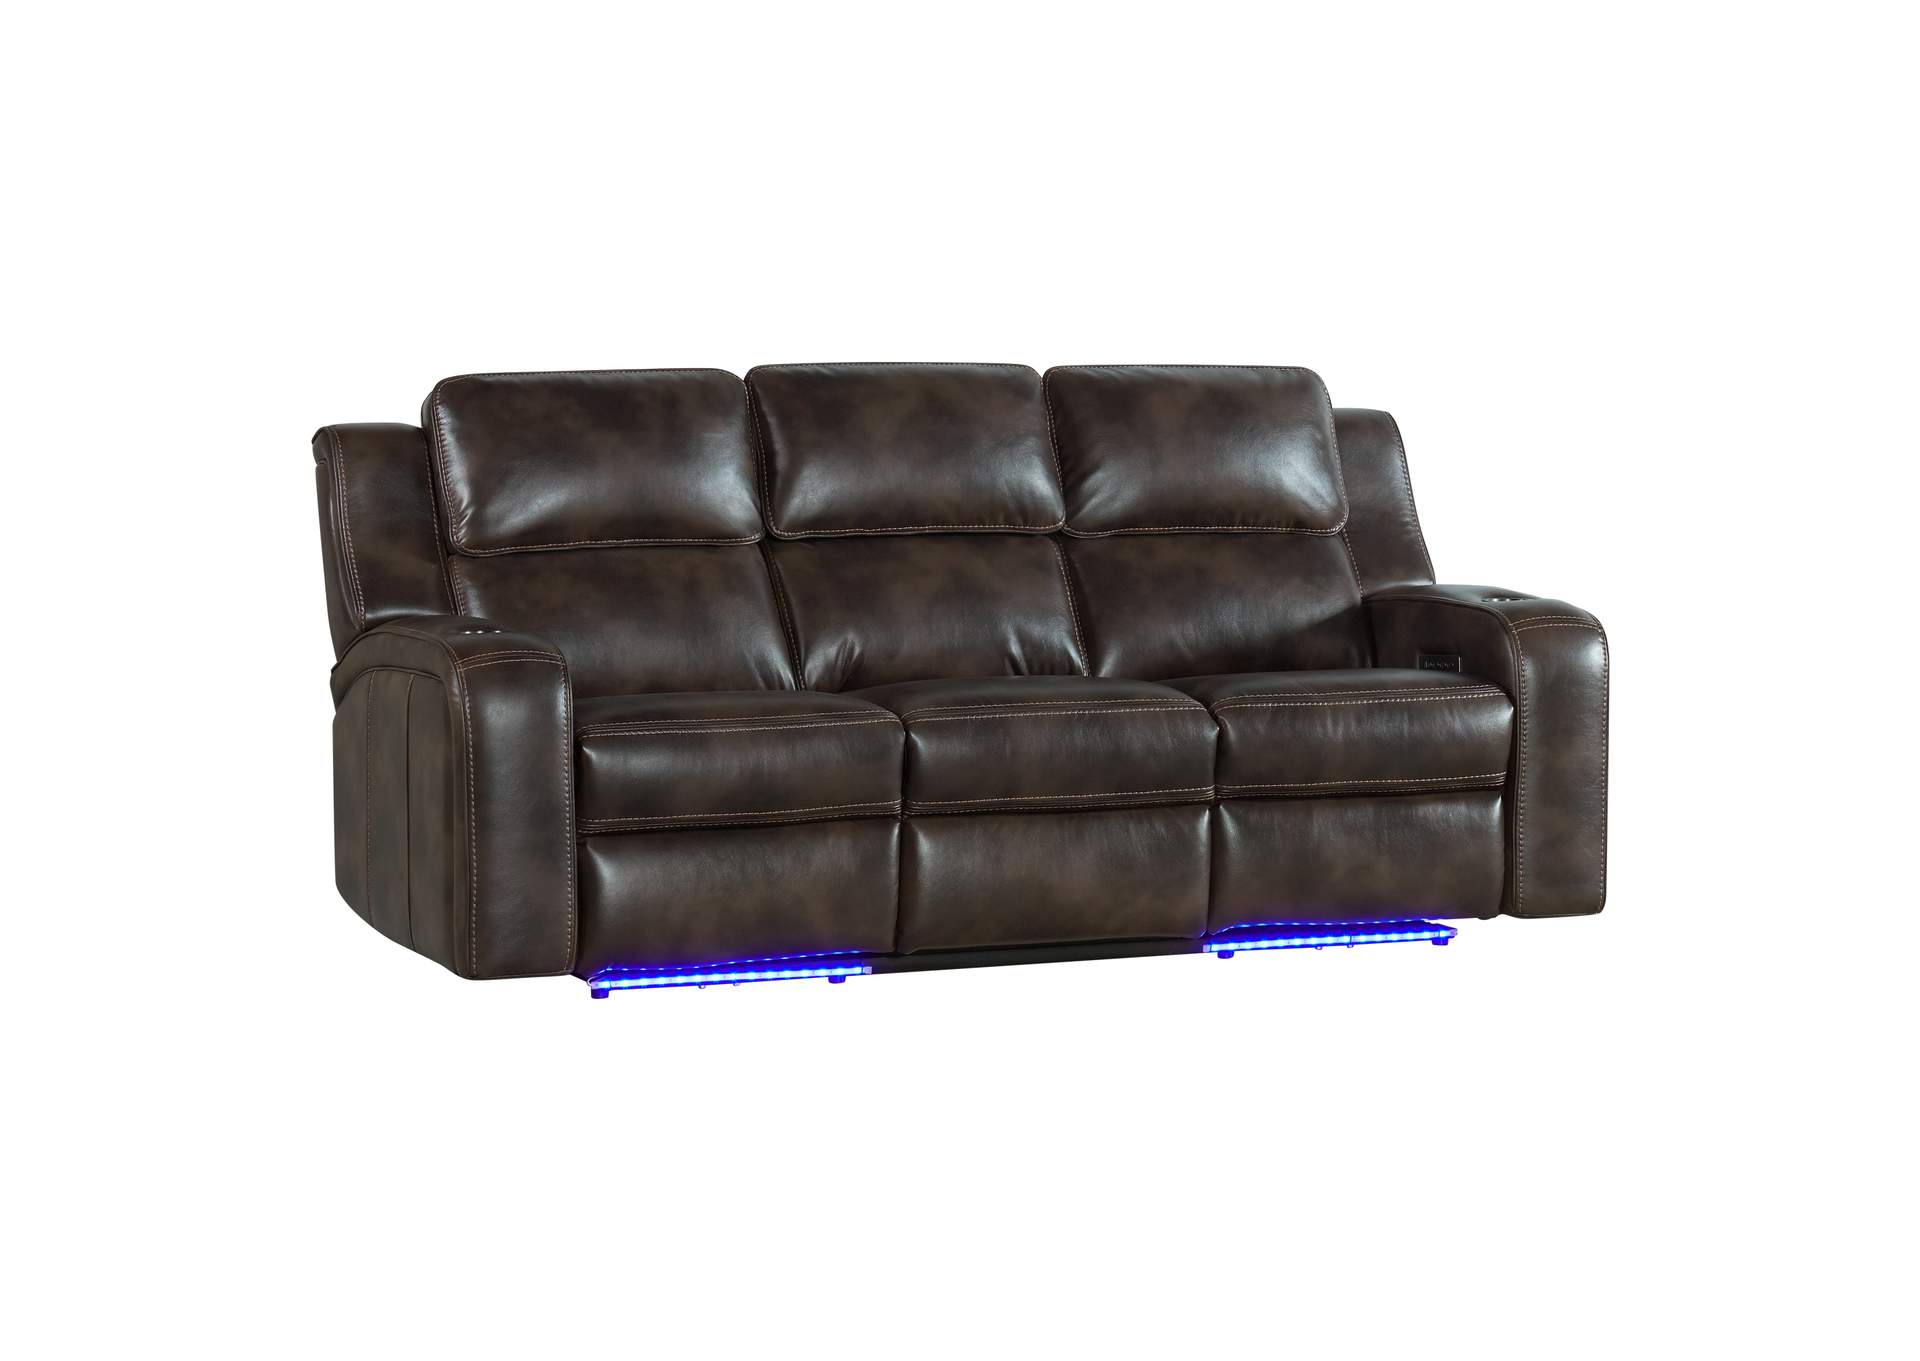 Dual-Pwr Recliner Sofa w/Drop,Intercon Furniture